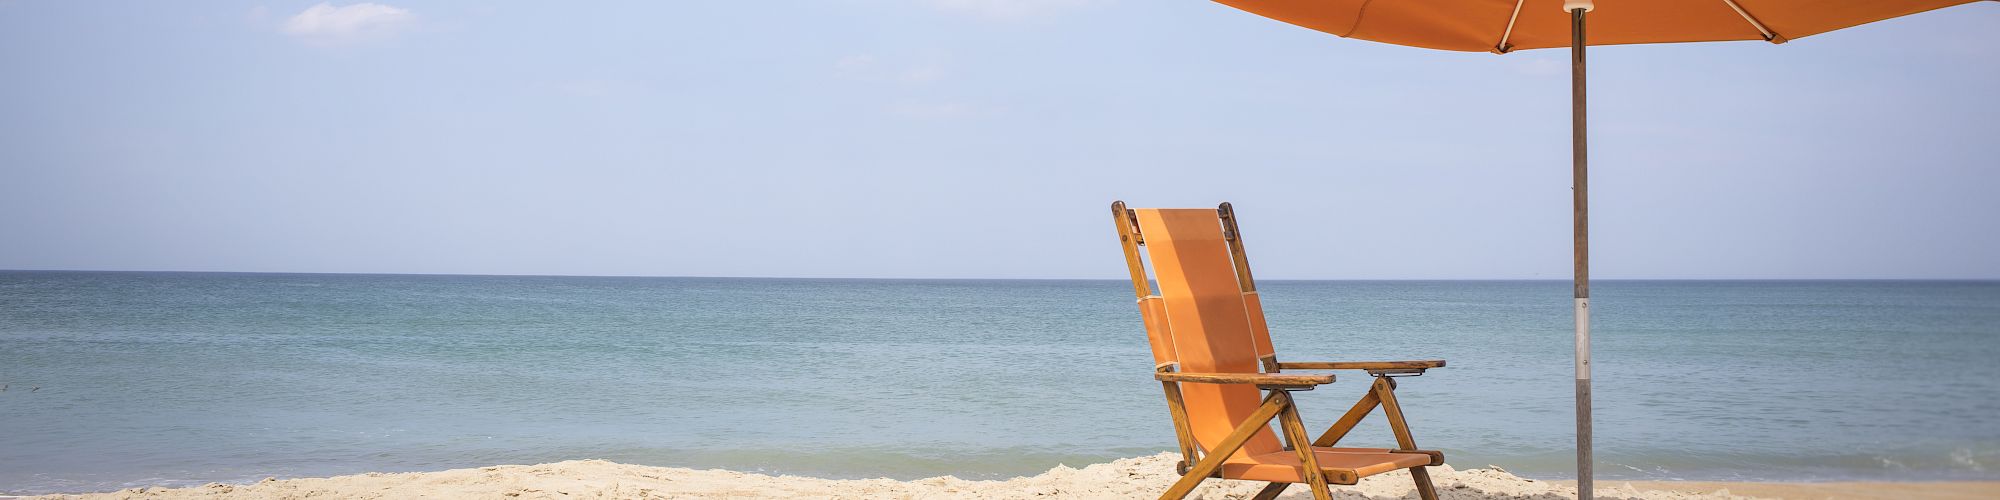 An orange beach chair and umbrella are set up on a sandy beach overlooking a calm, blue ocean under a partly cloudy sky.